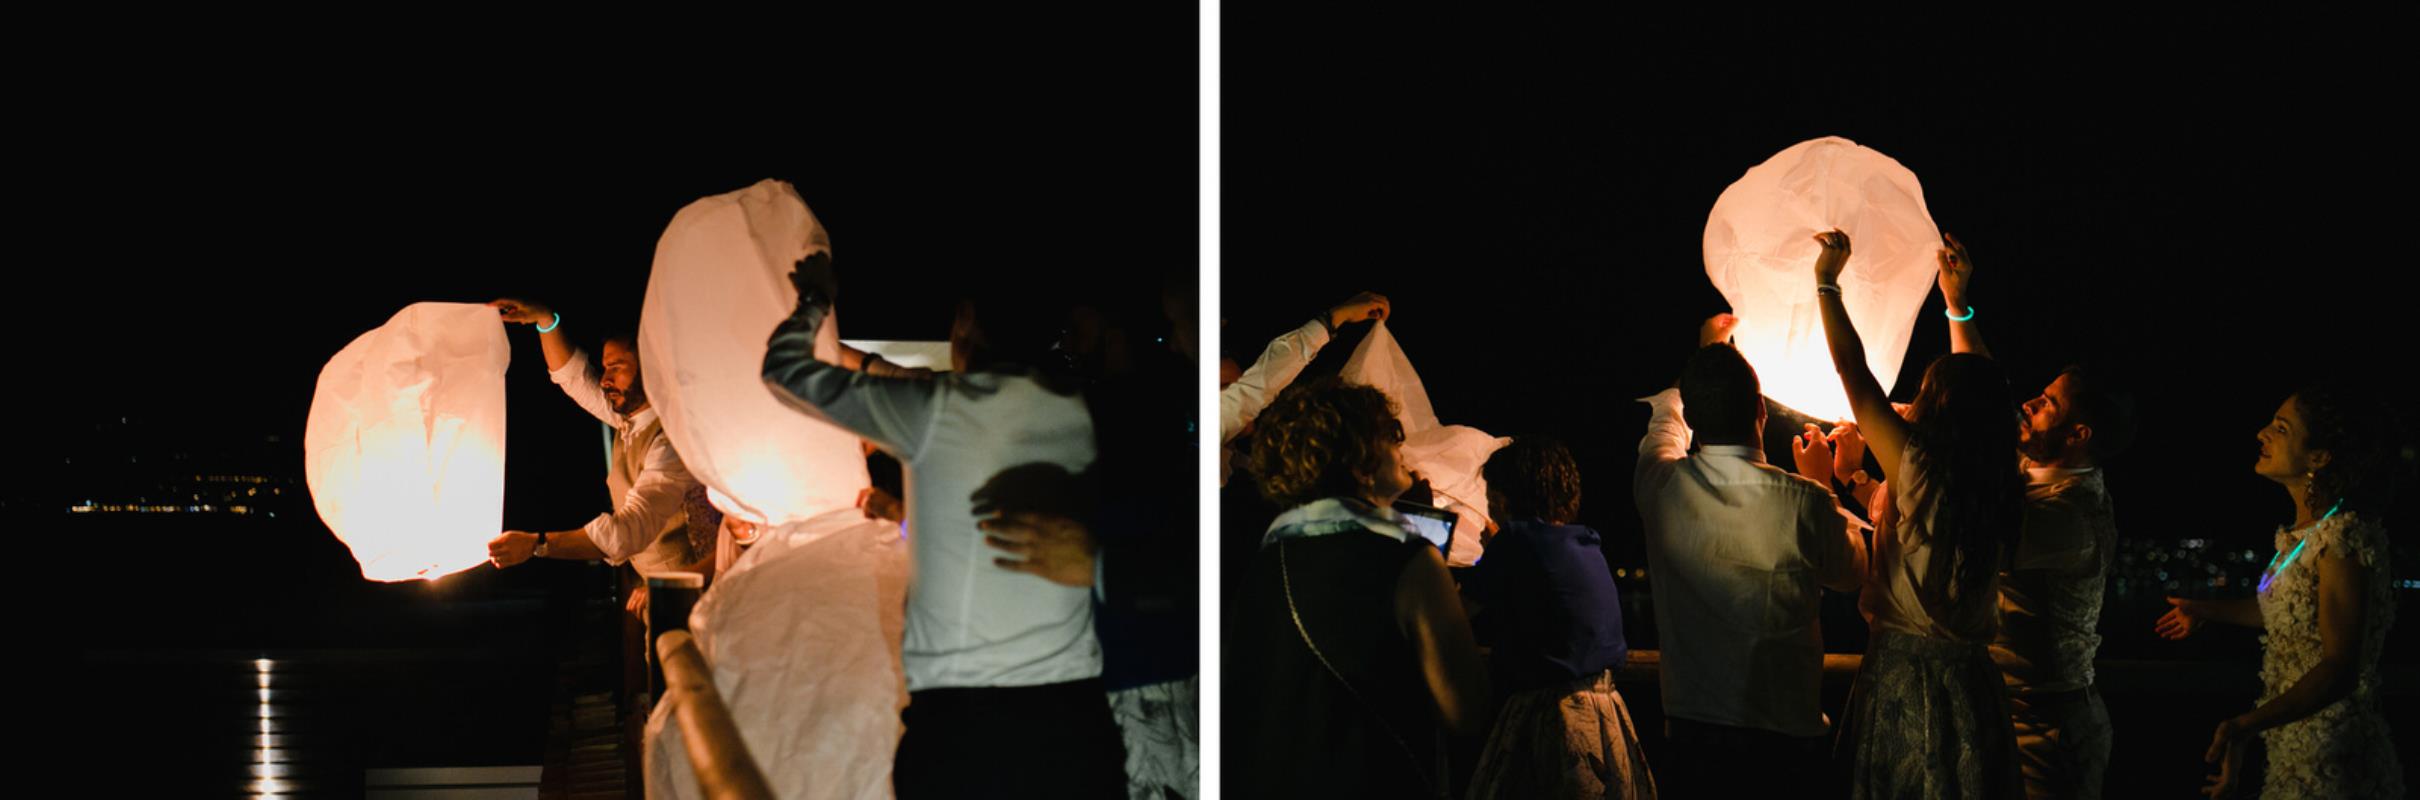 M&N wedding iseo lake | Laura Stramacchia | Wedding Photography